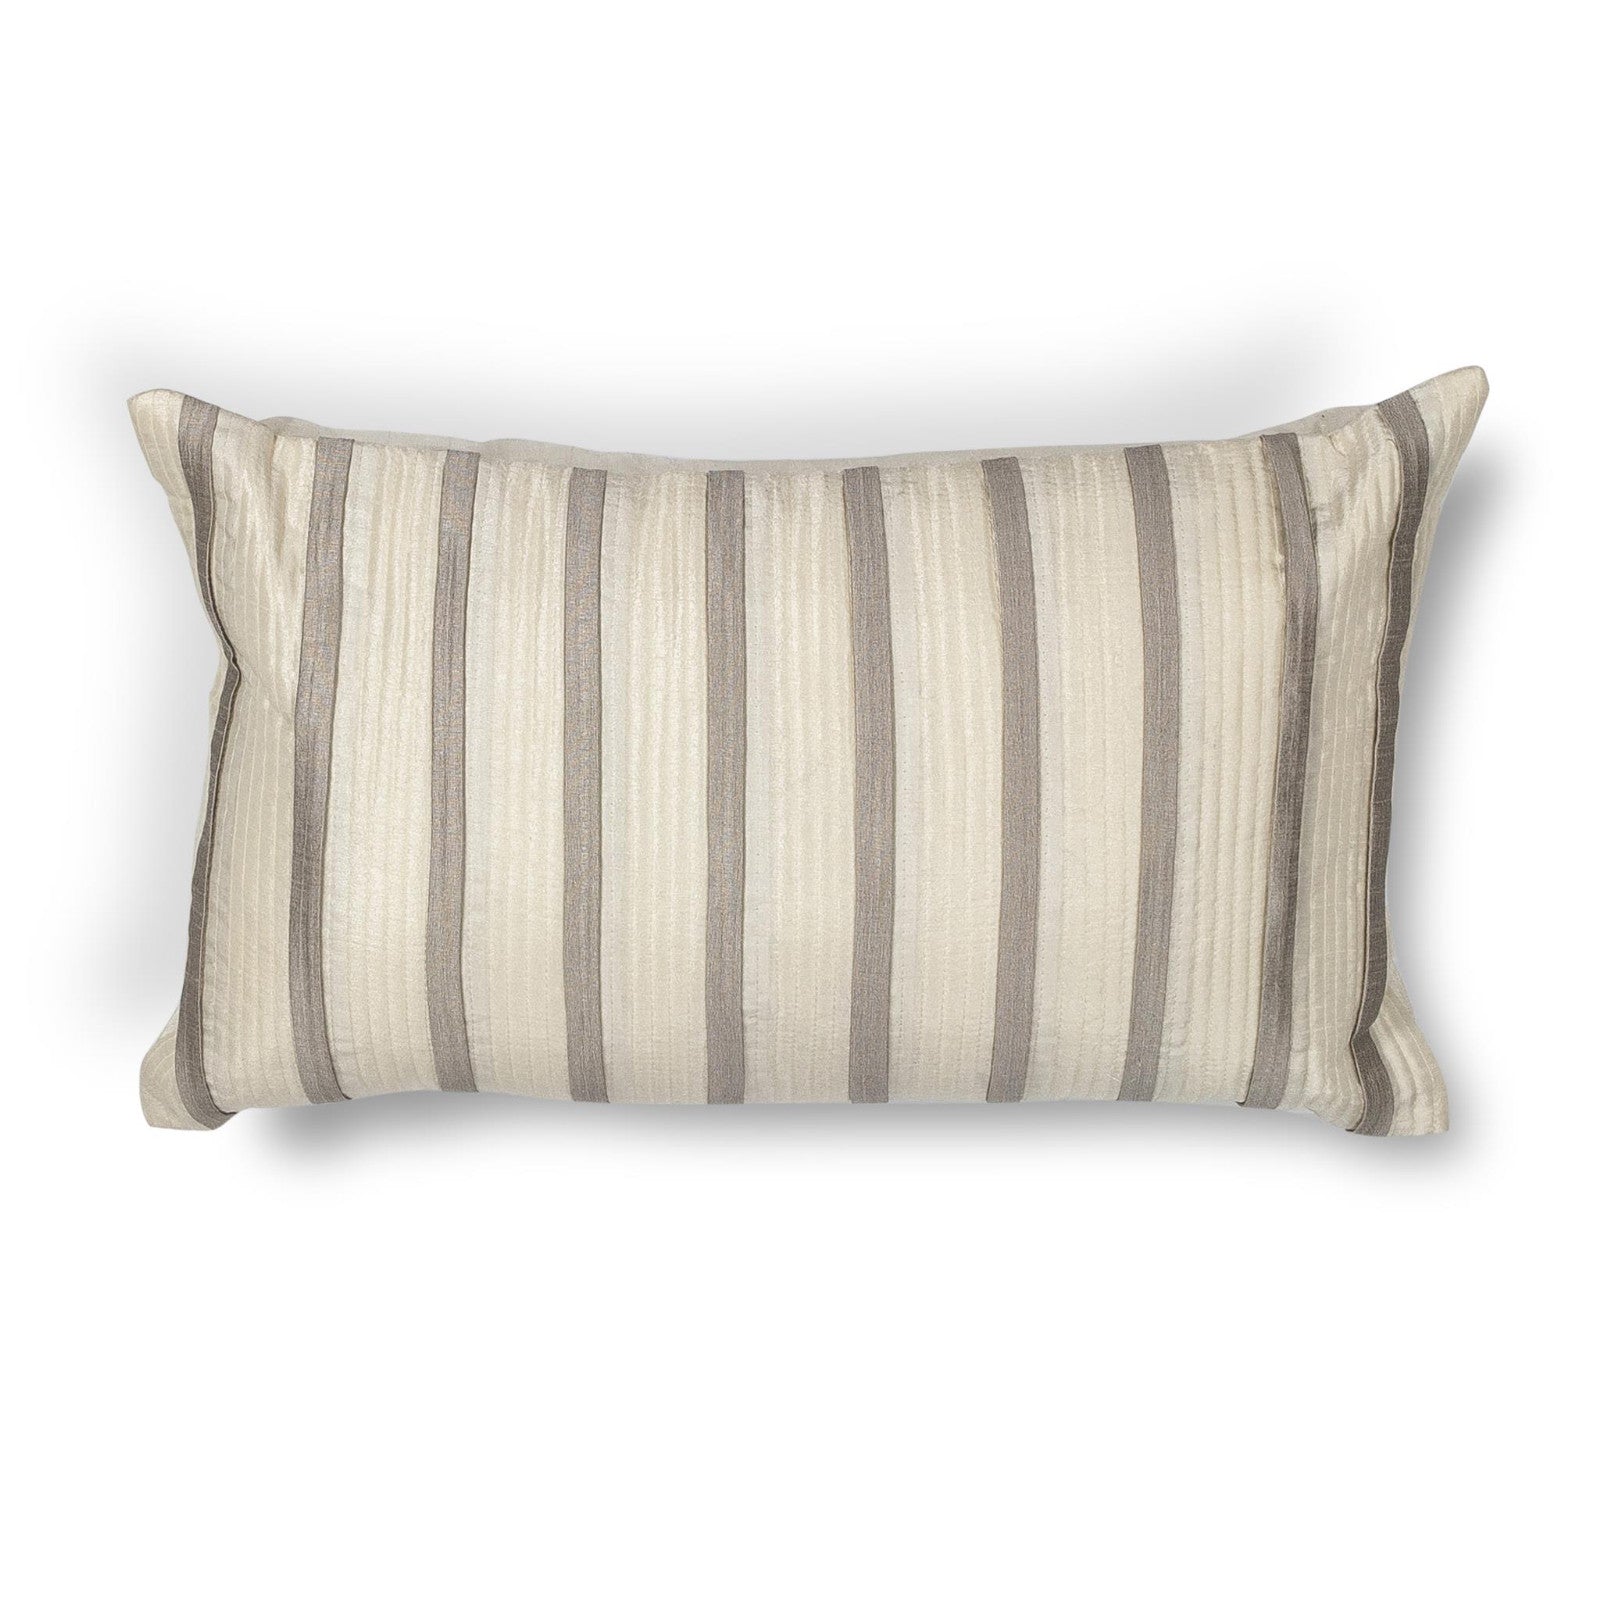 KAS Pillow L223 Ivory/Grey Stripes main image